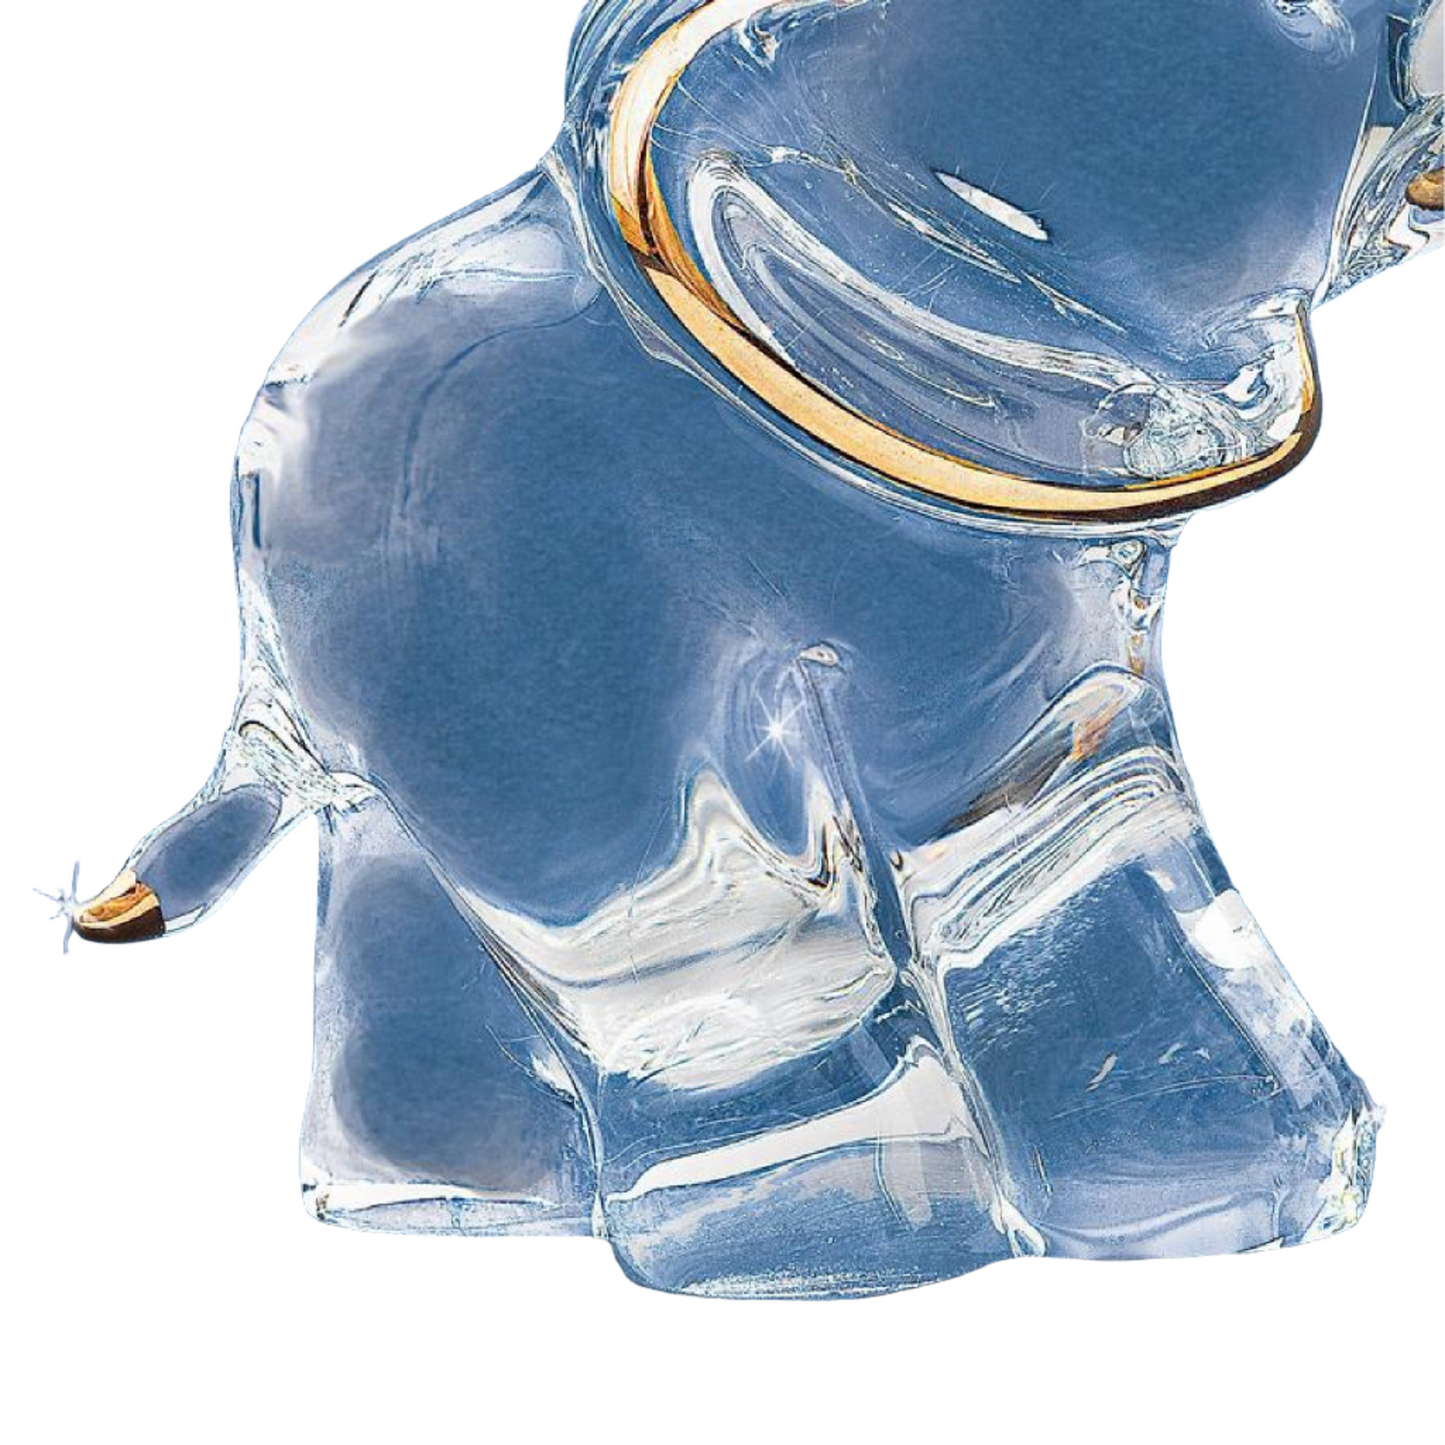 Glass Baron Elephant Figure